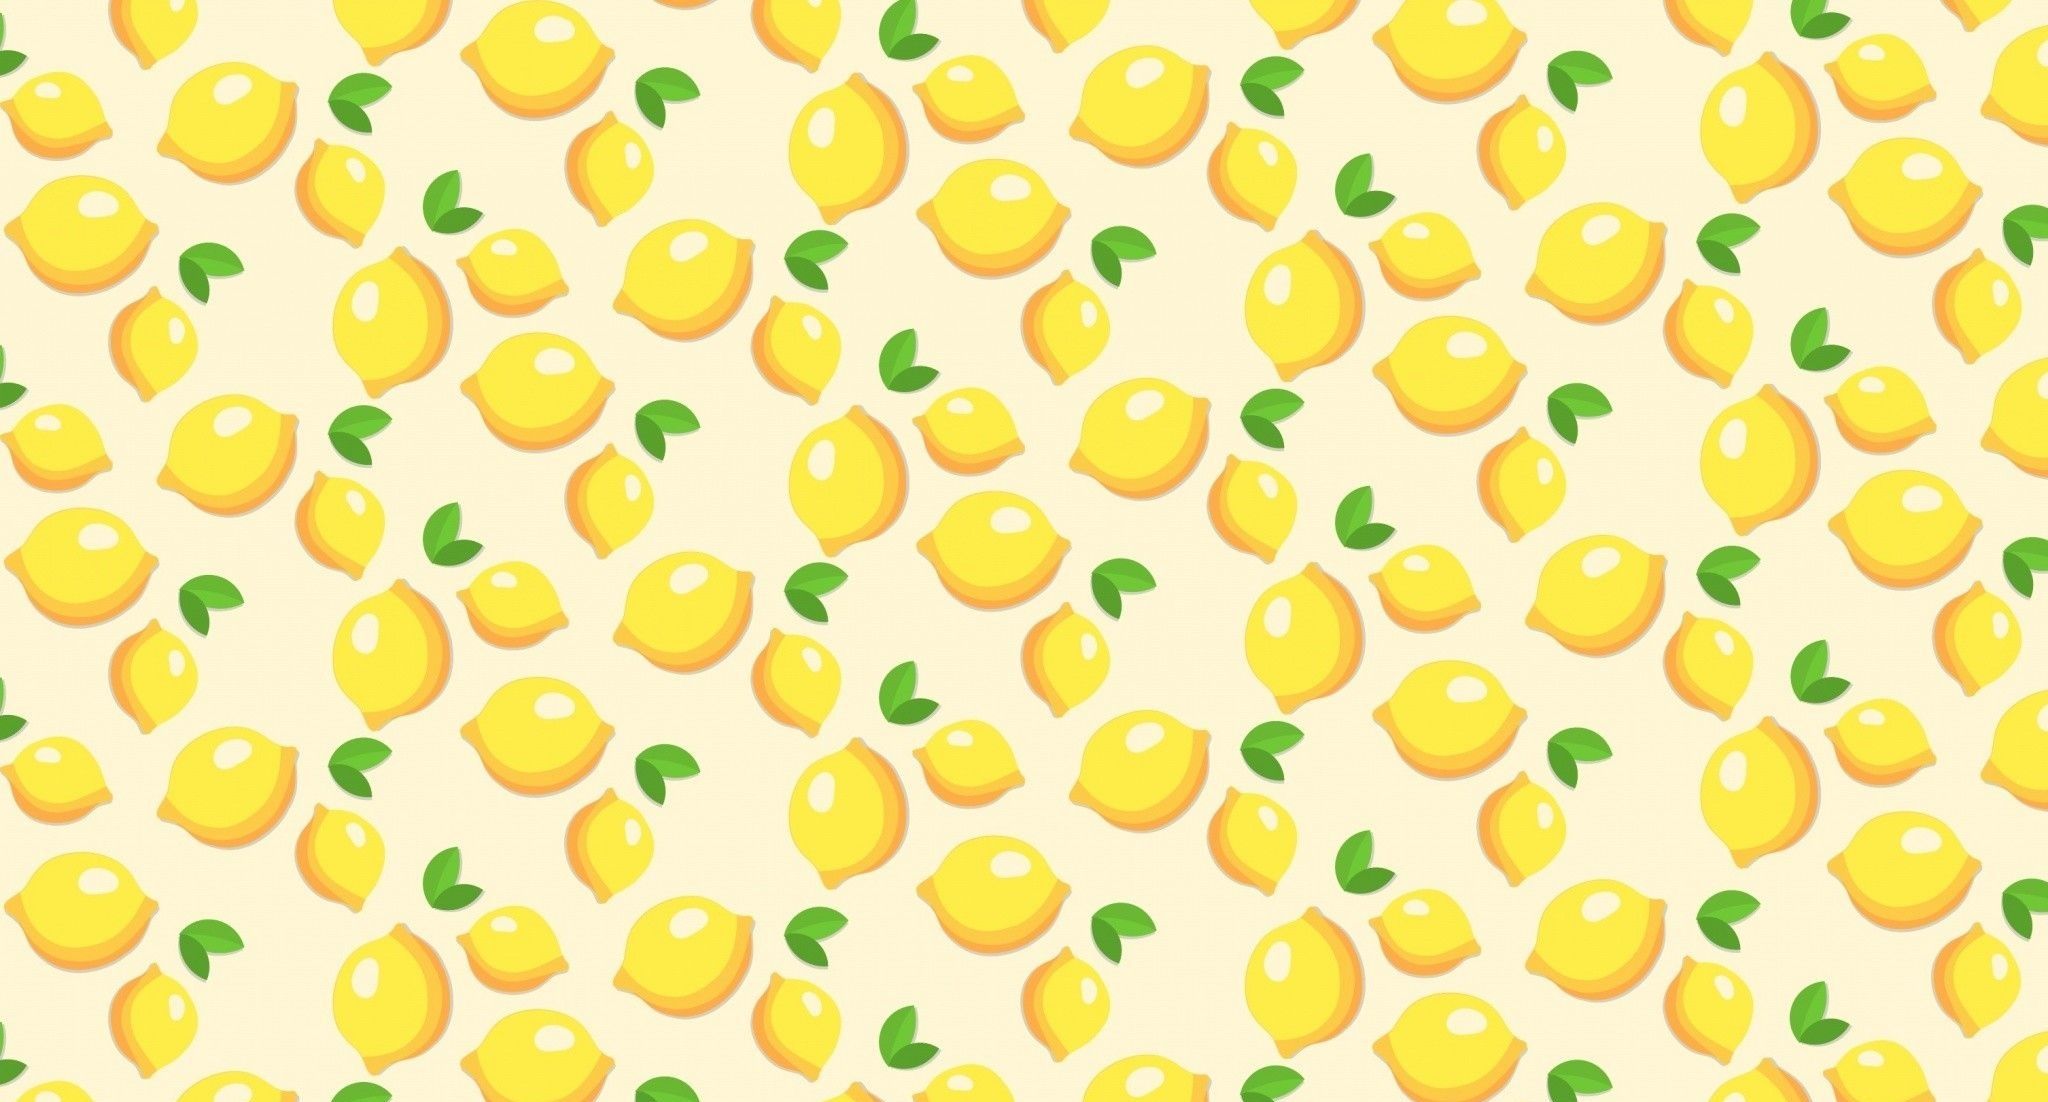 A pattern of lemons on white background - Light yellow